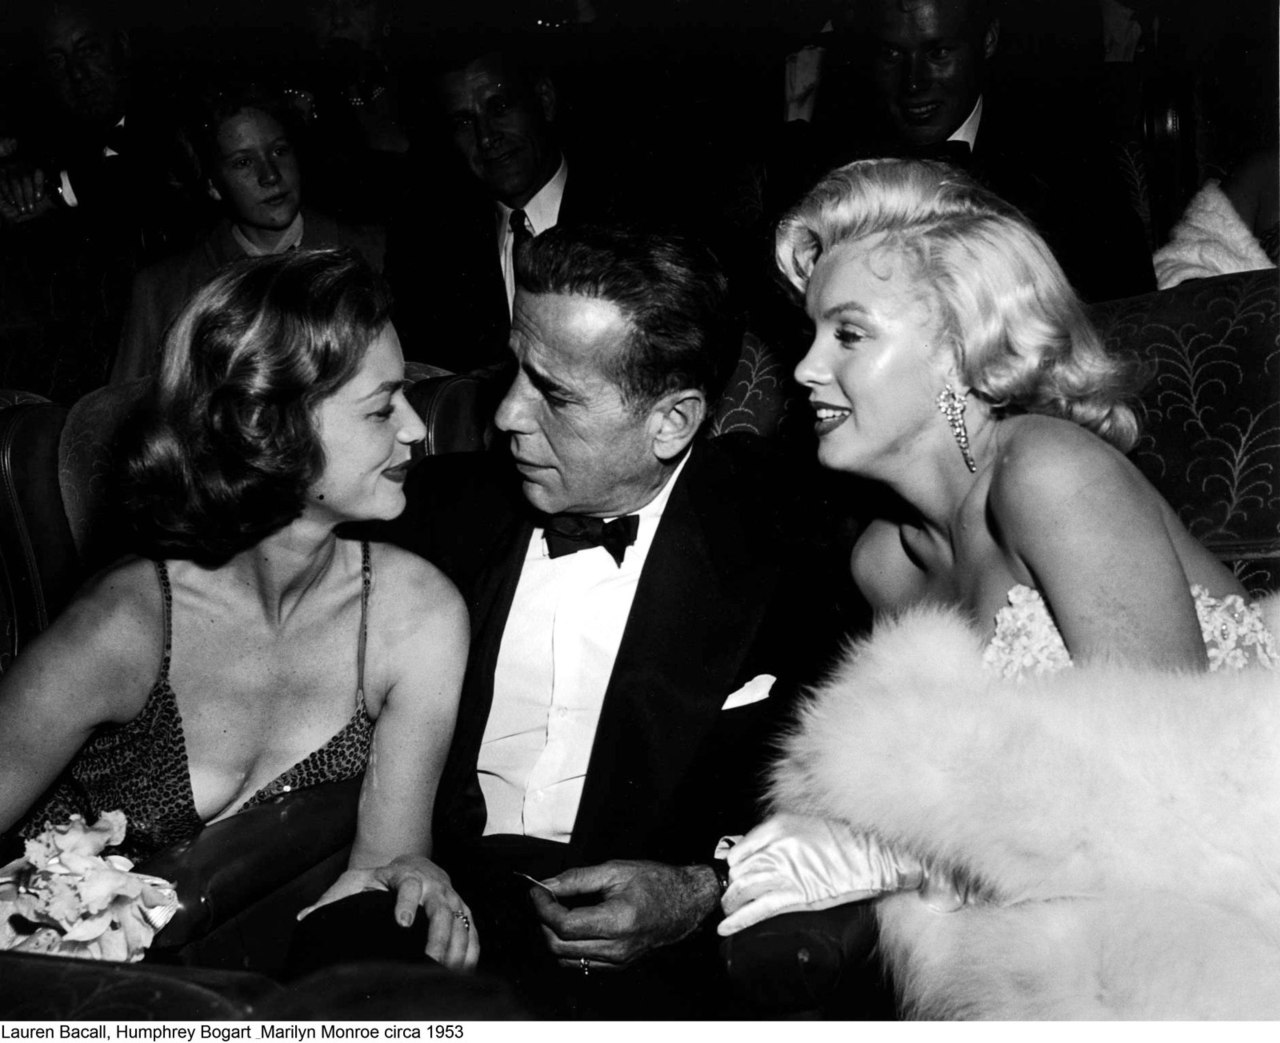 http://4.bp.blogspot.com/-R_Ap7cCR2Rs/TwS43ziRKxI/AAAAAAAABXg/4L9FzWmUrx4/s1600/Lauren+Bacall%252C+Humphrey+Bogart+%2526+Marilyn+Monroe.jpg